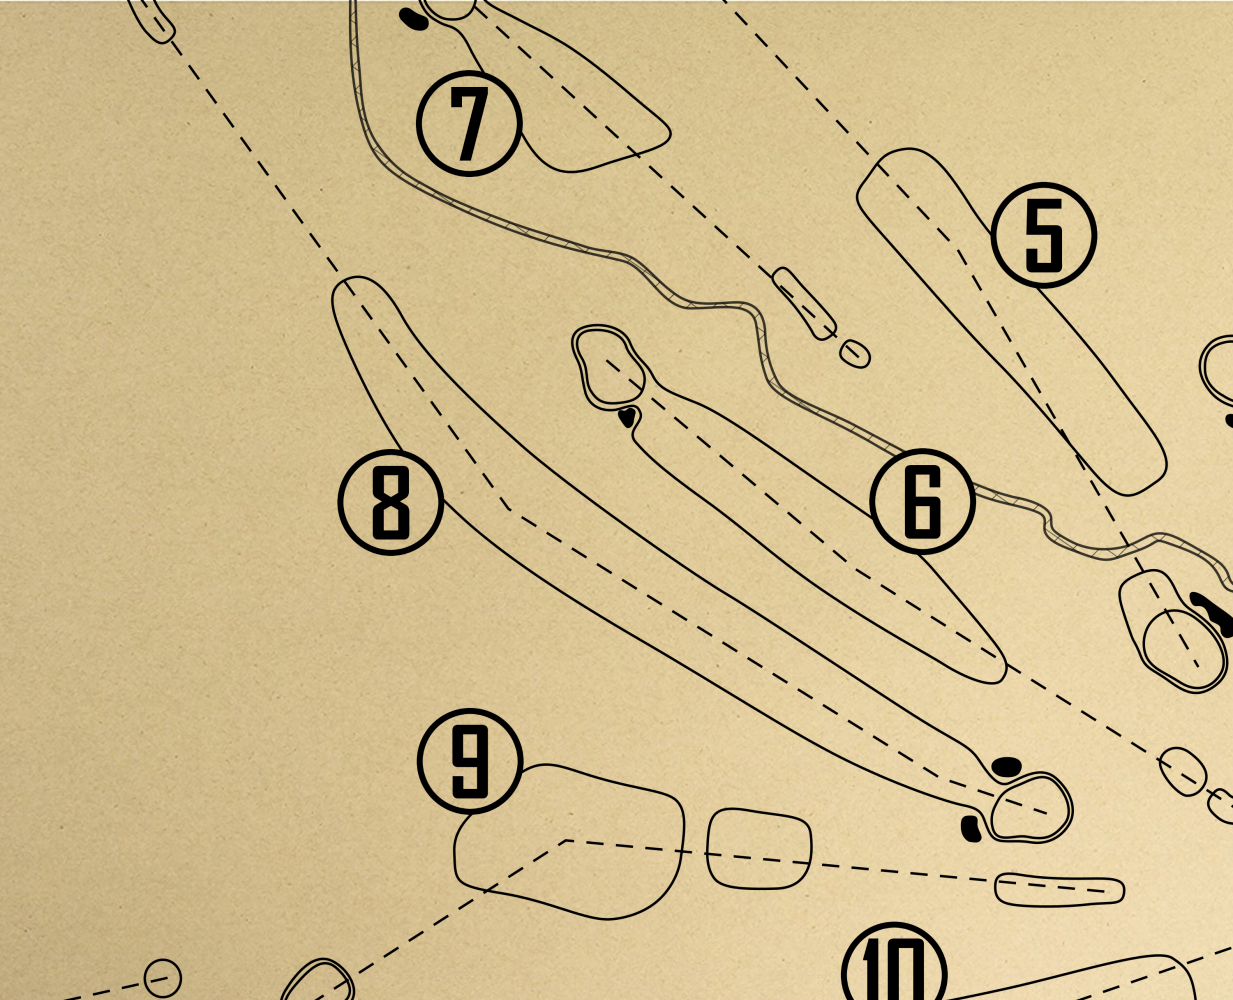 Tilden Park Golf Course Outline (Print)